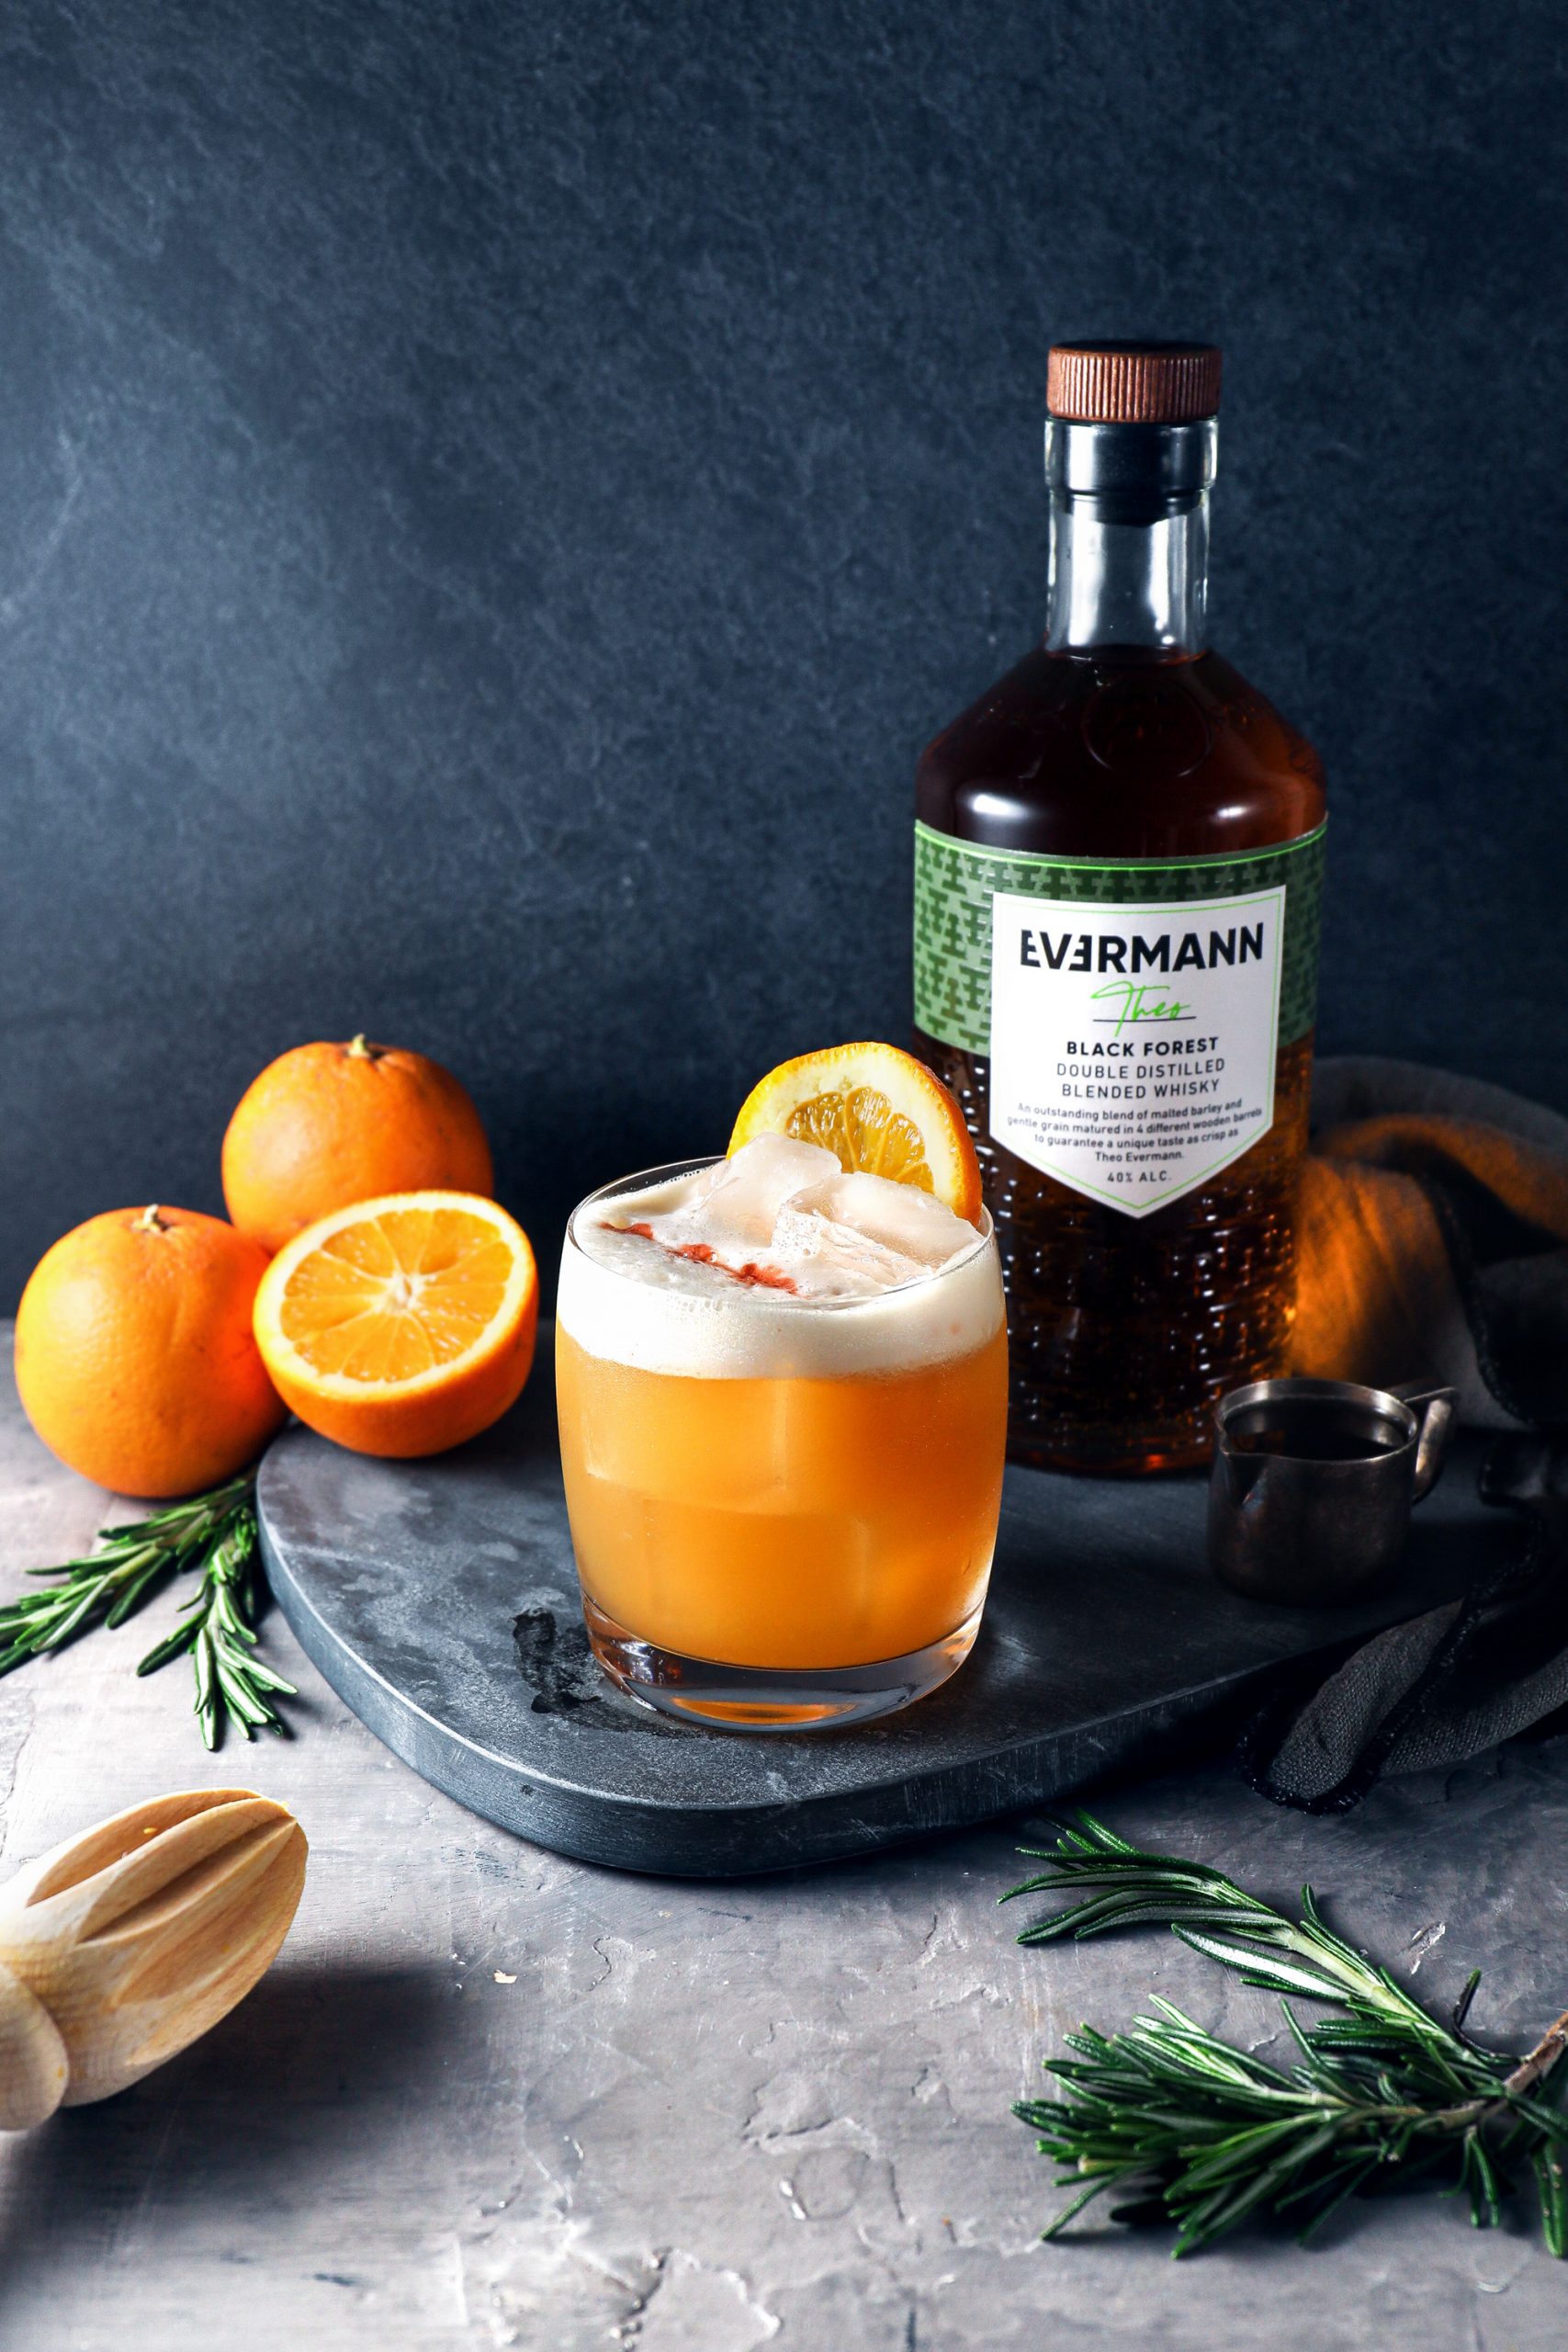 Theo Evermann Blended Whisky im Kptn Cook Special - Bimmerle Shop